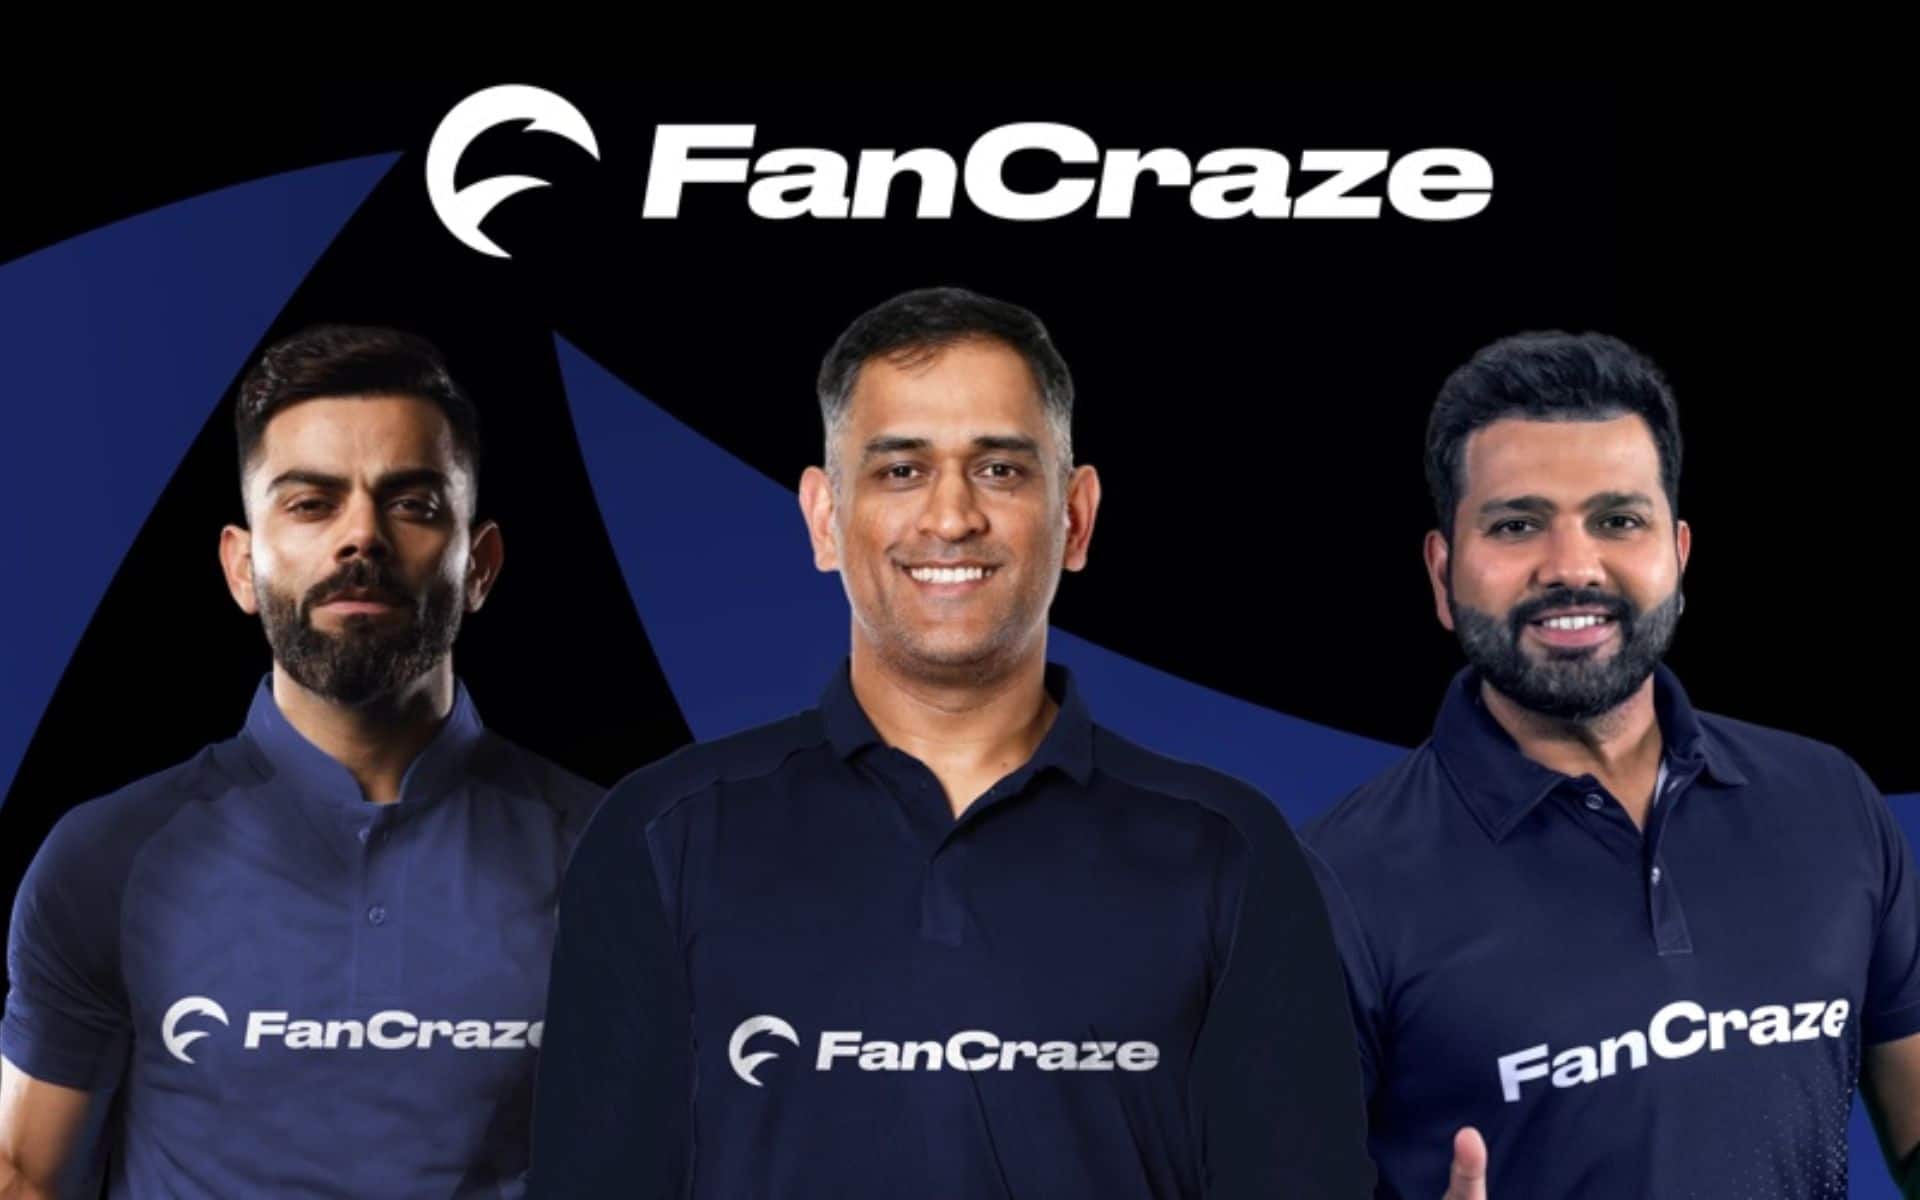 Fancraze is the official sponsor for ICC (x.com)